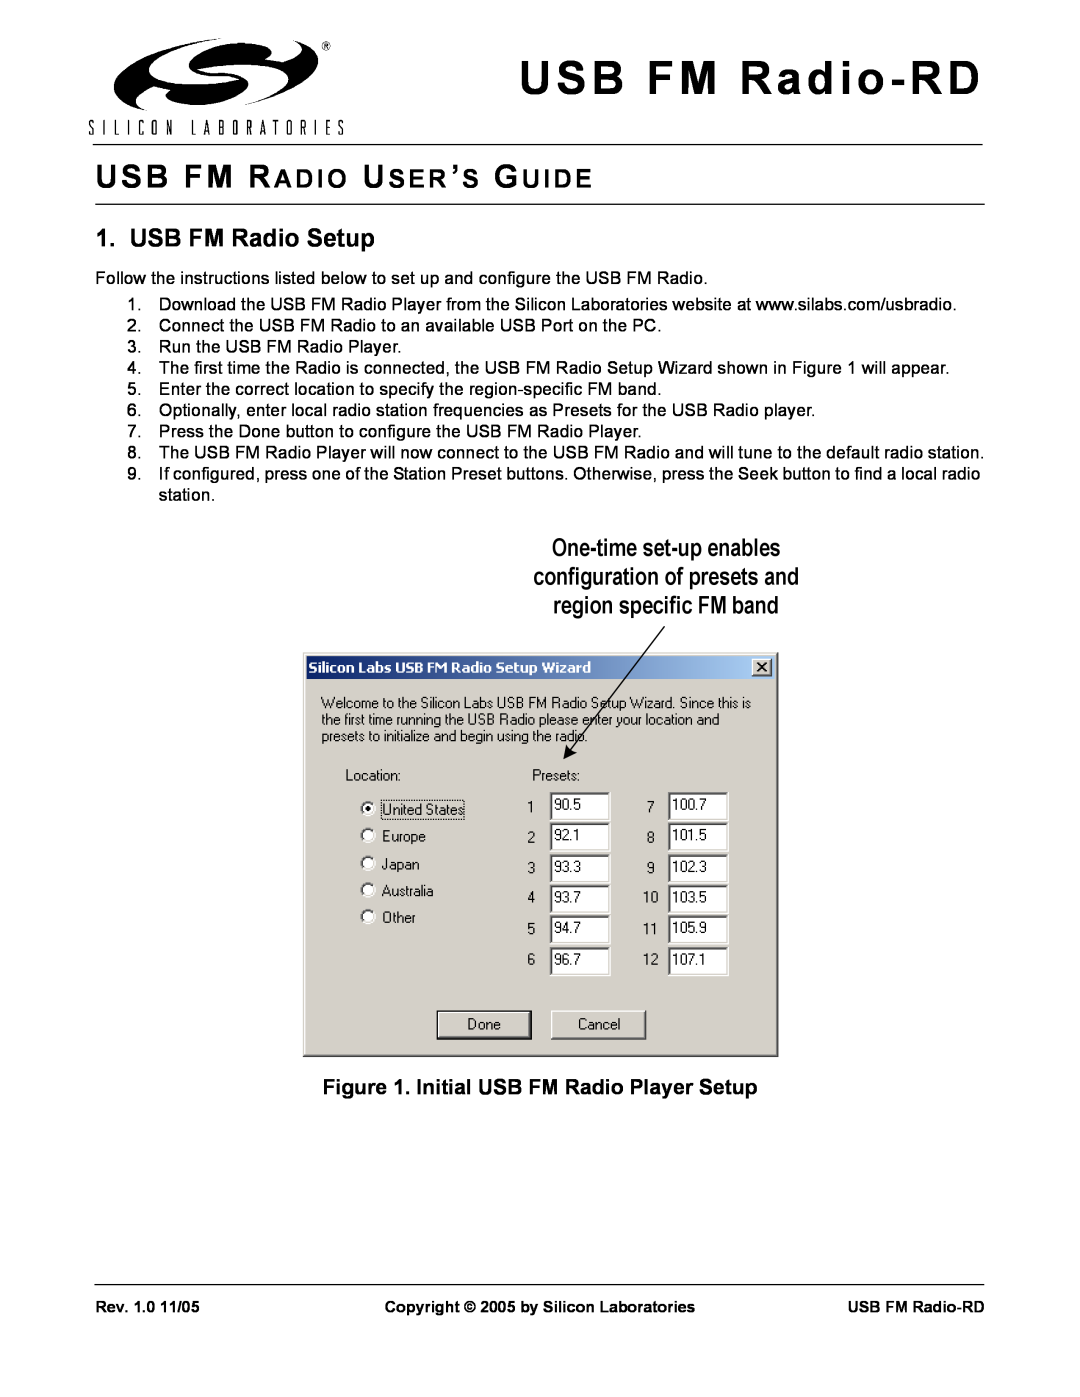 Silicon Laboratories manual Usb Fm Ra D I O Us E R ’S Gu I De, USB FM Radio Setup, USB FM Radio-RD 